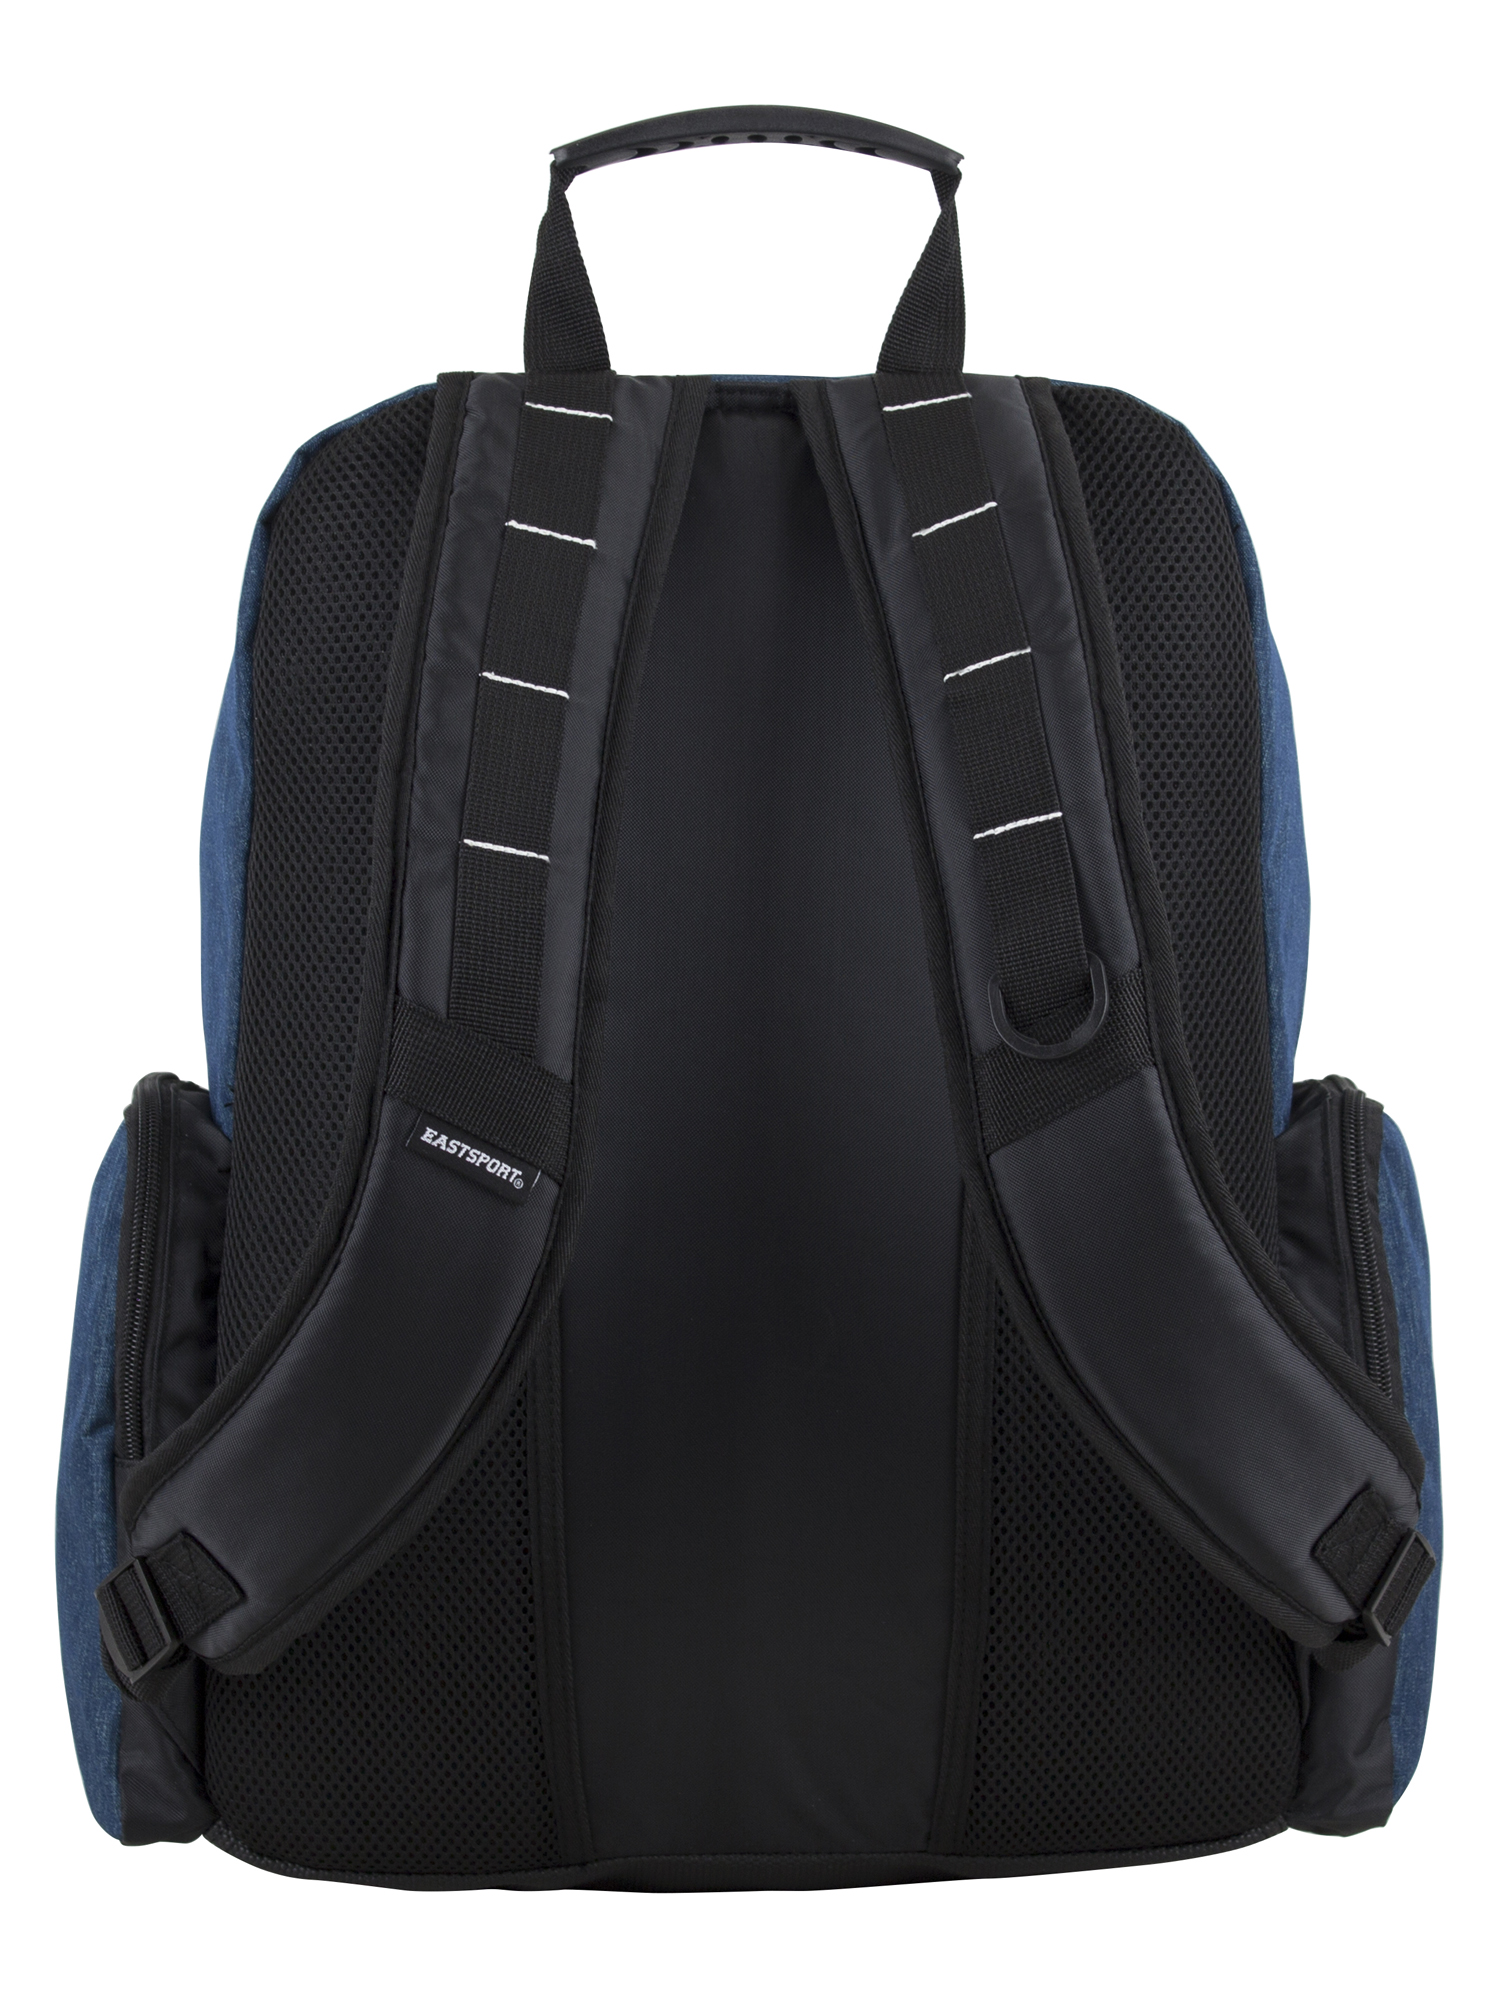 Eastsport Optimus Backpack, Navy - image 4 of 8